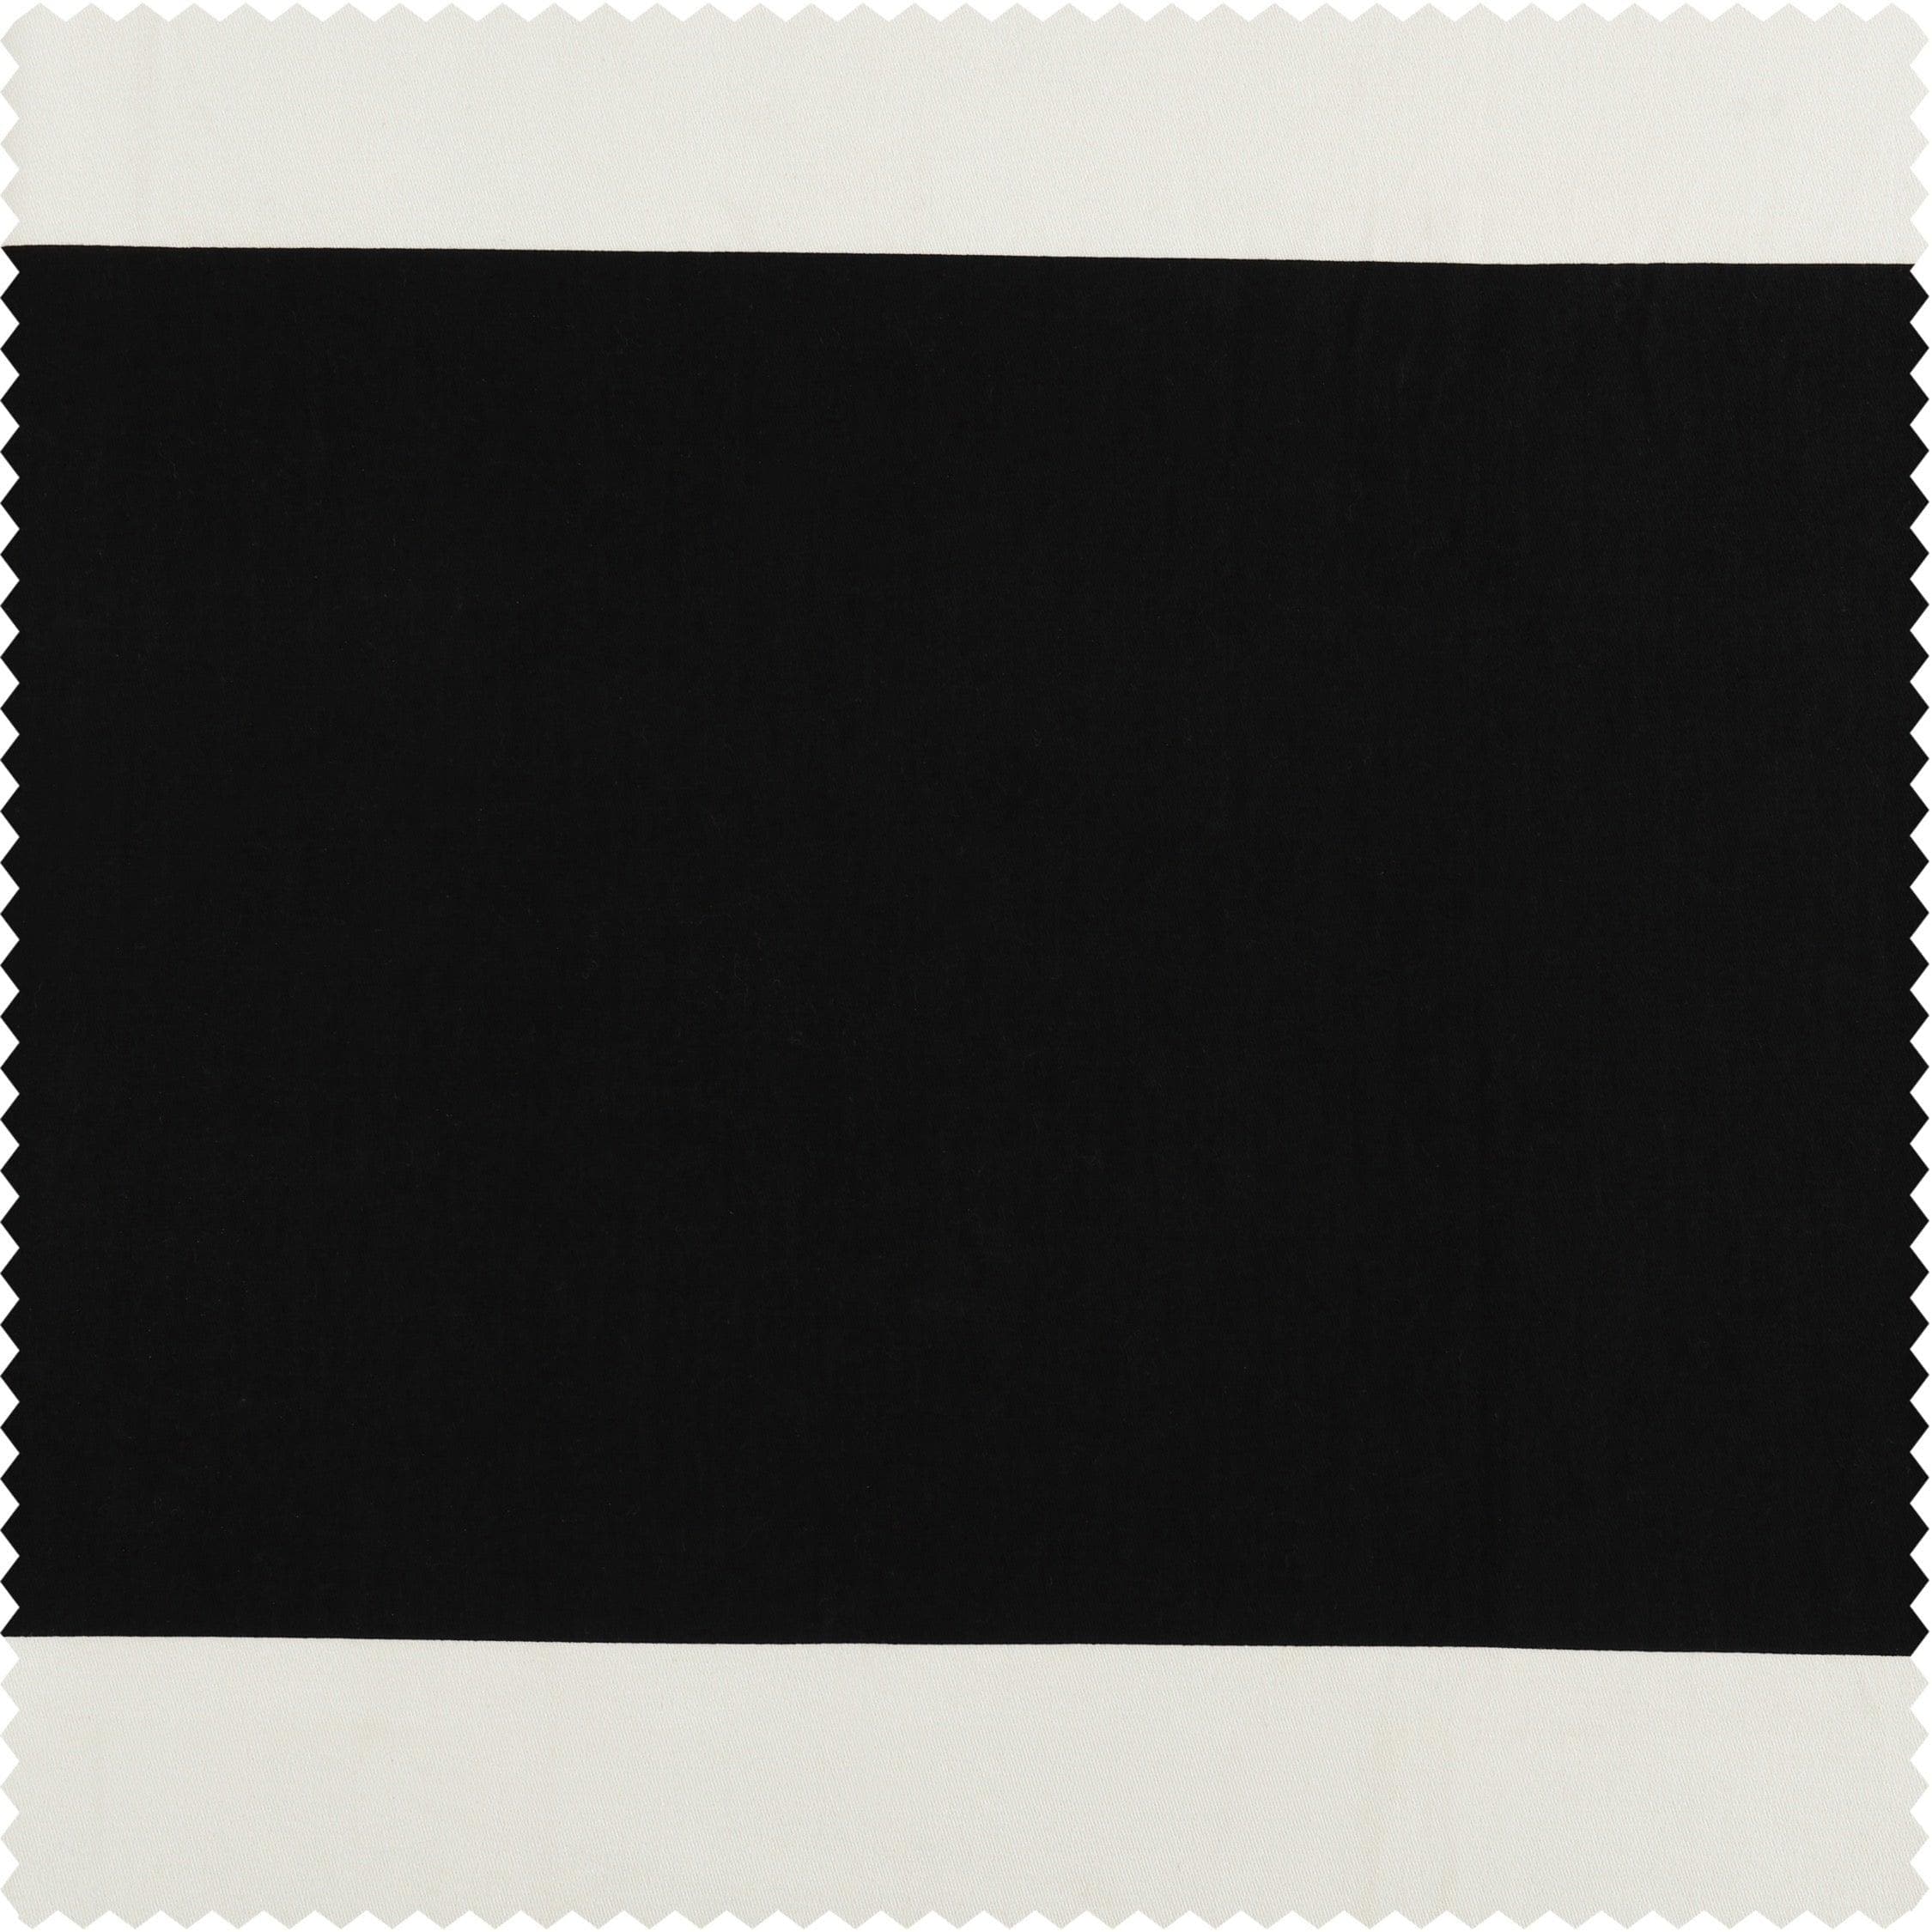 Onyx Black & Off White Horizontal Striped Printed Cotton Room Darkening Curtain